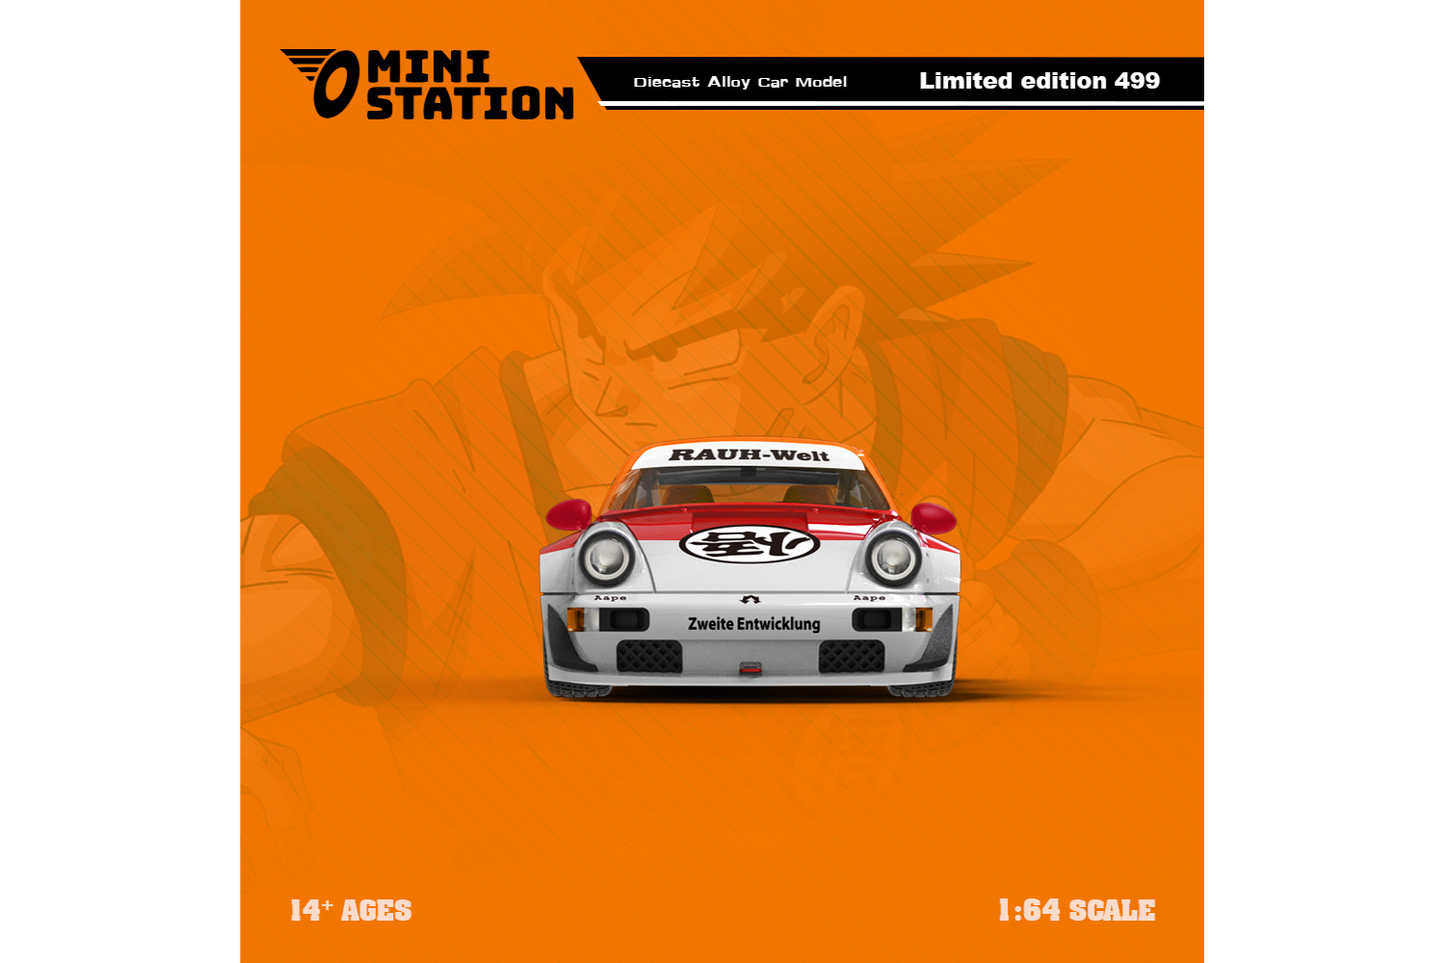 Mini Station 1/64 Porsche RWB 964 in Dragon Ball Z Livery